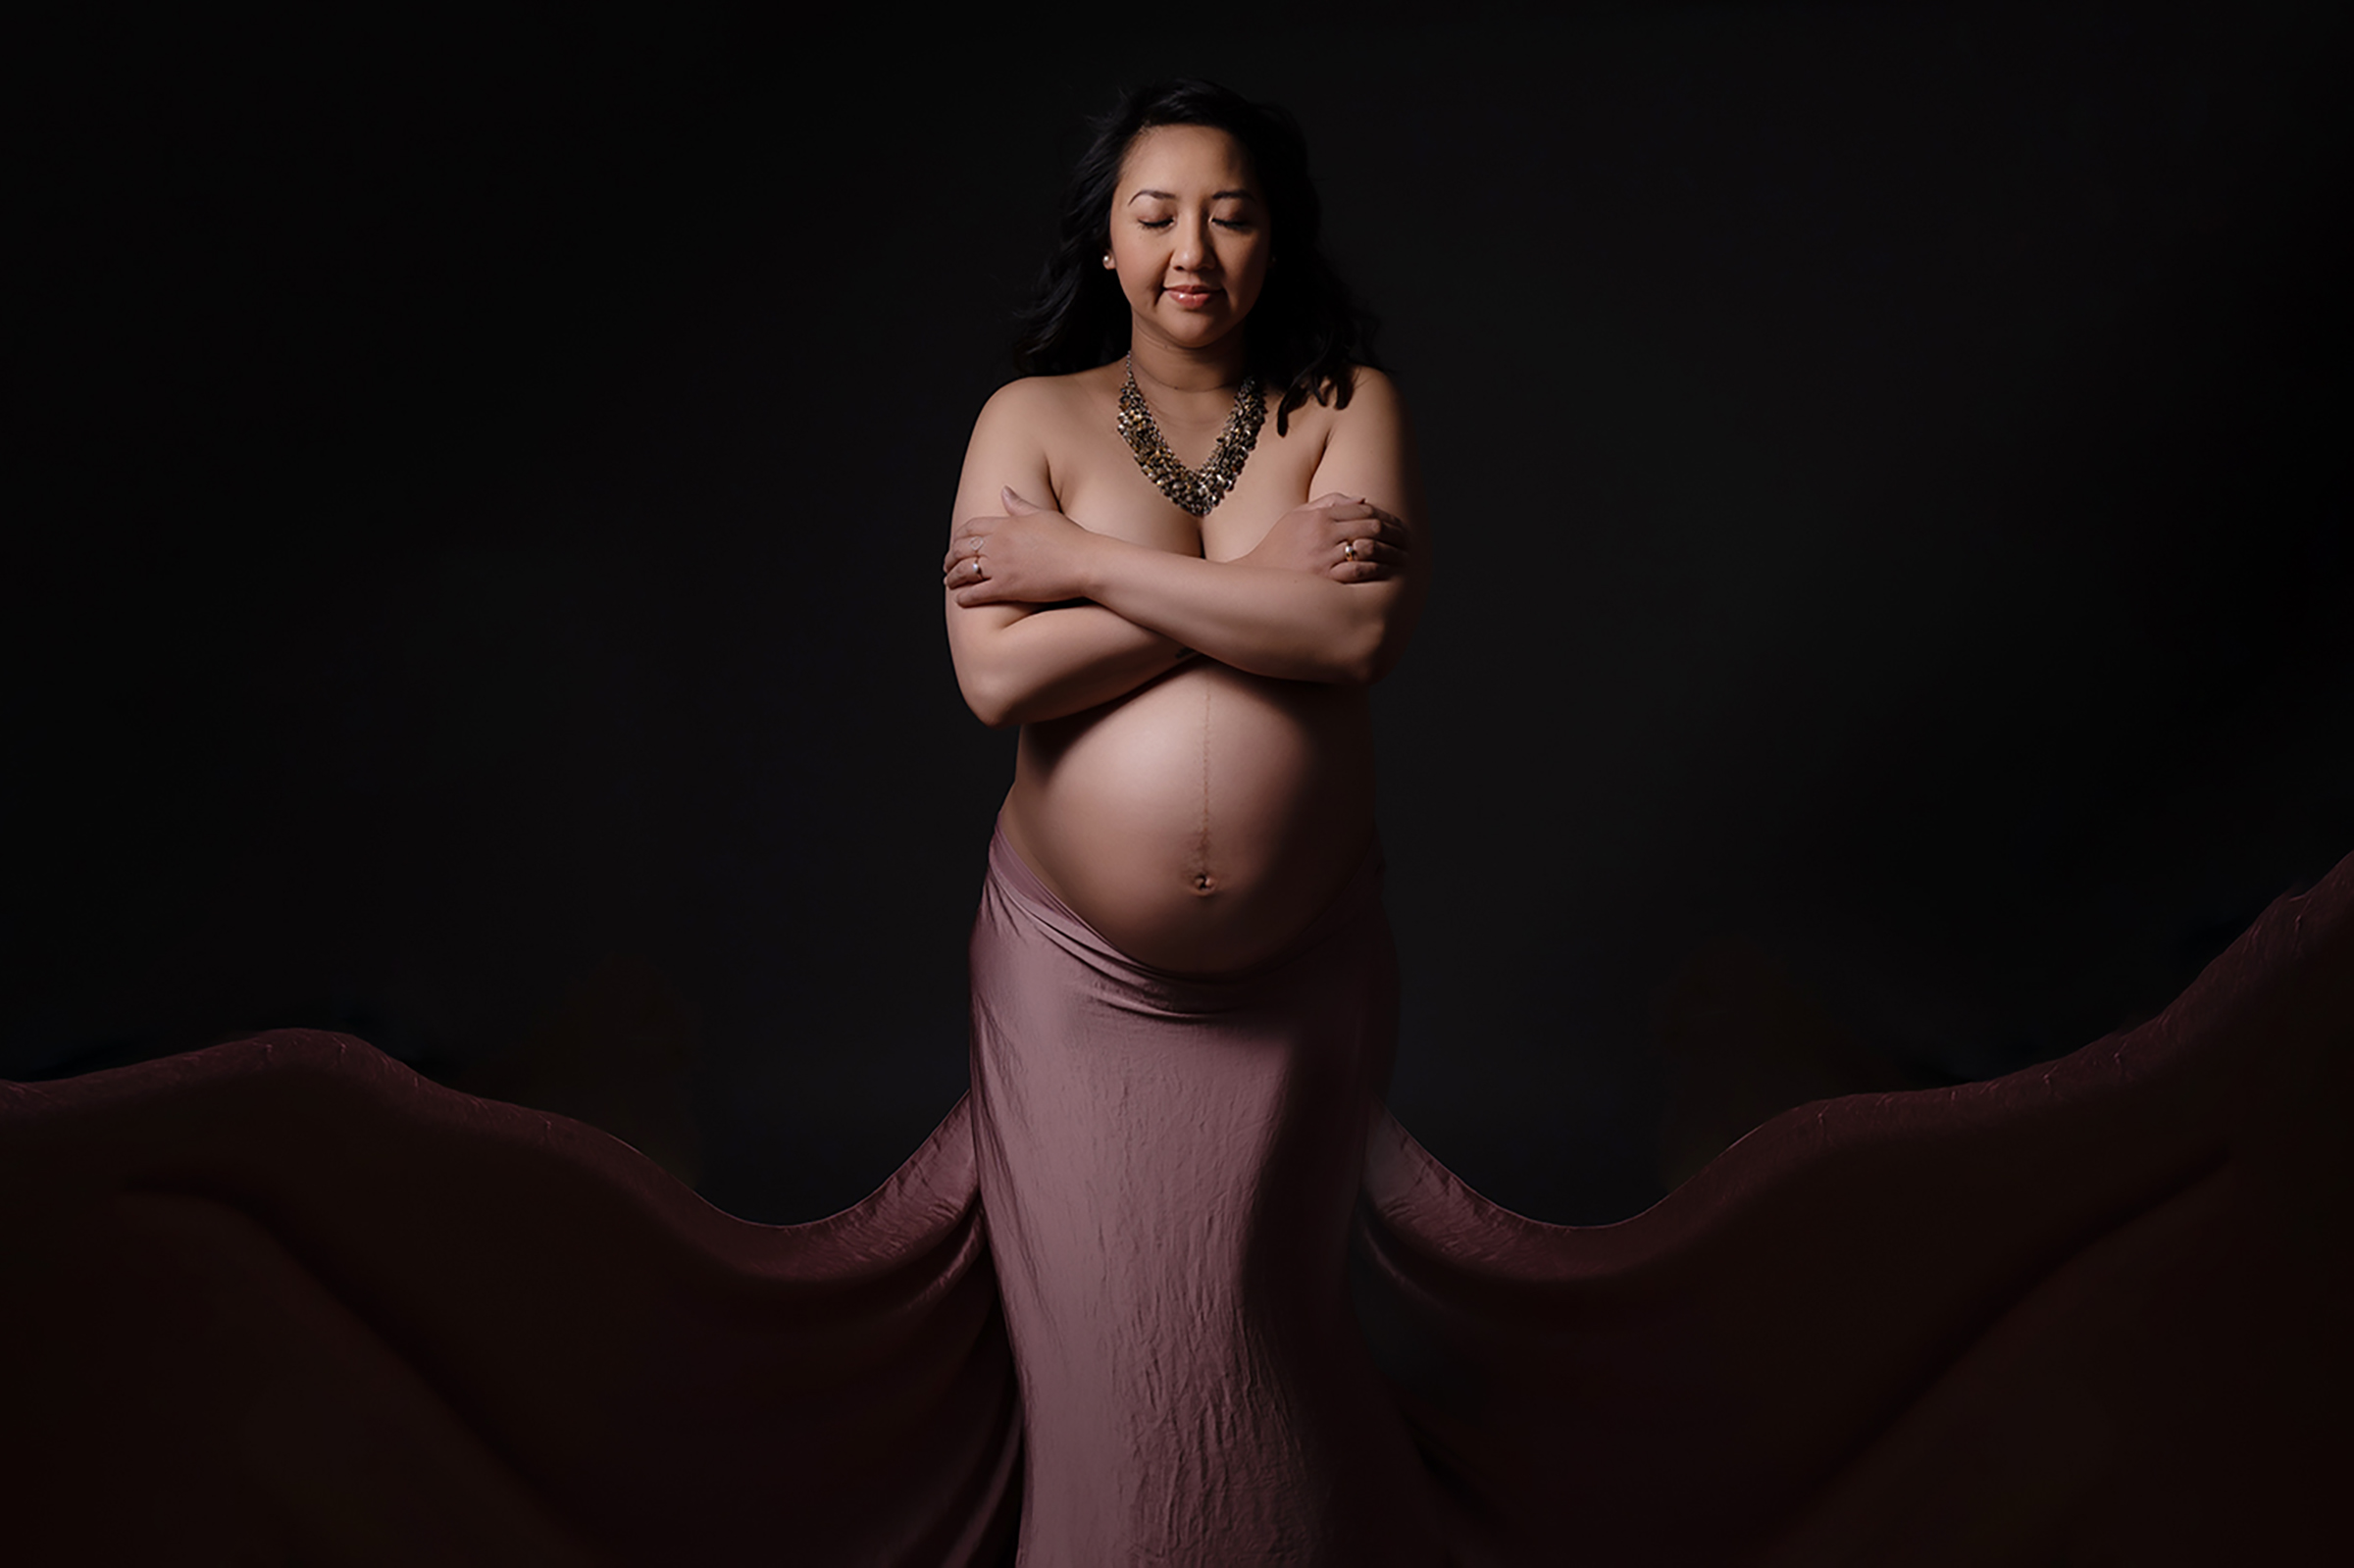 professional maternity photograph by maternity photographer Beautiful Bairns Edinburgh